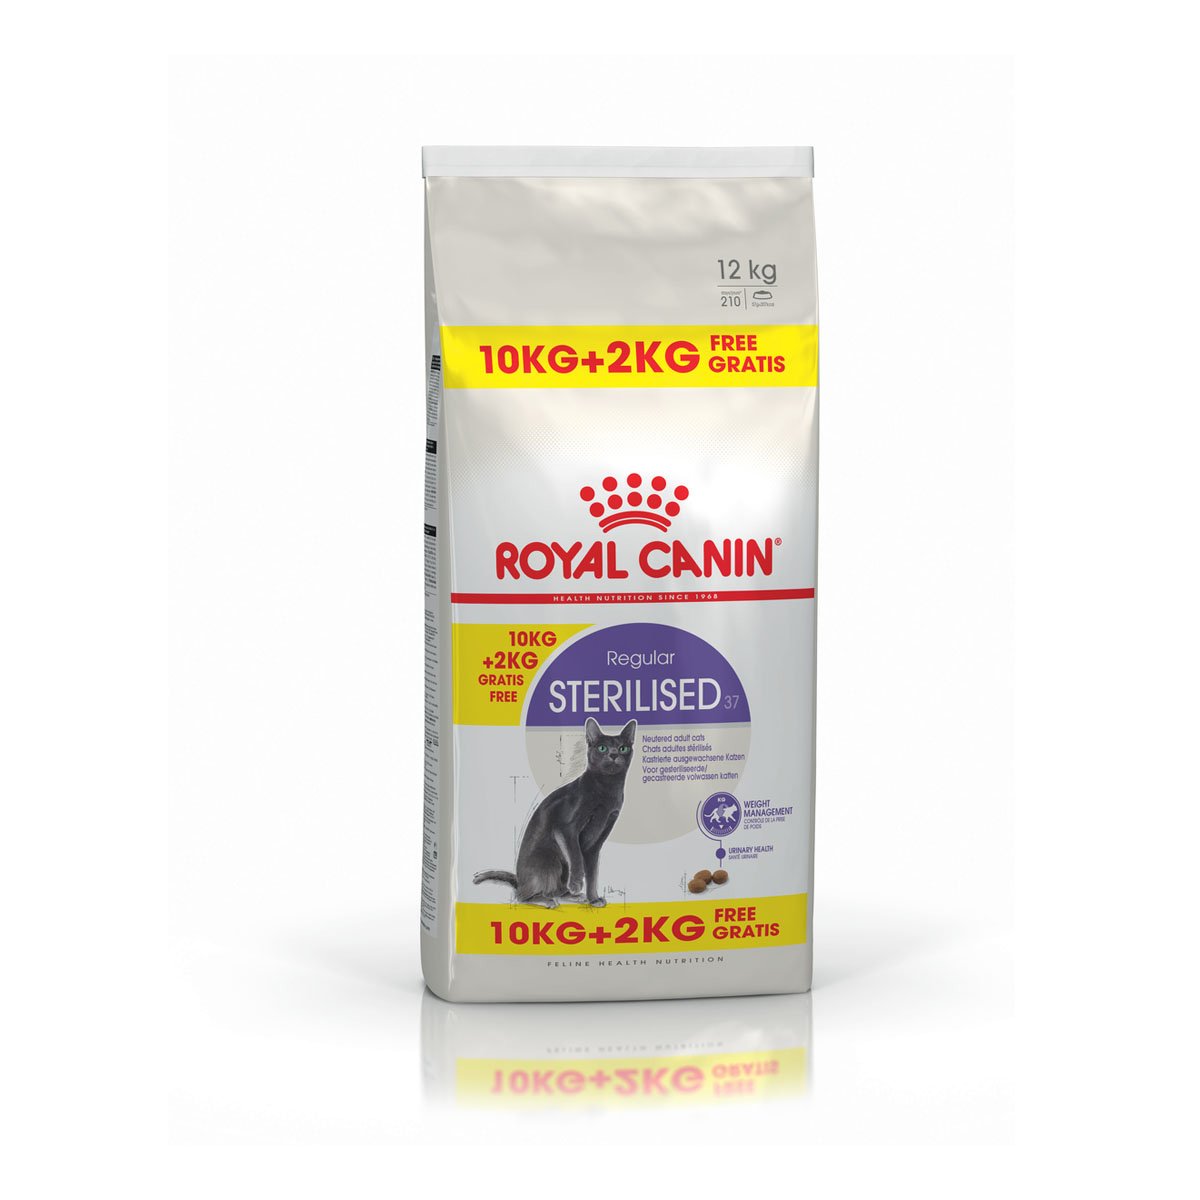 ROYAL CANIN STERILISED Trockenfutter für kastrierte Katzen 10kg+2kg gratis von Royal Canin